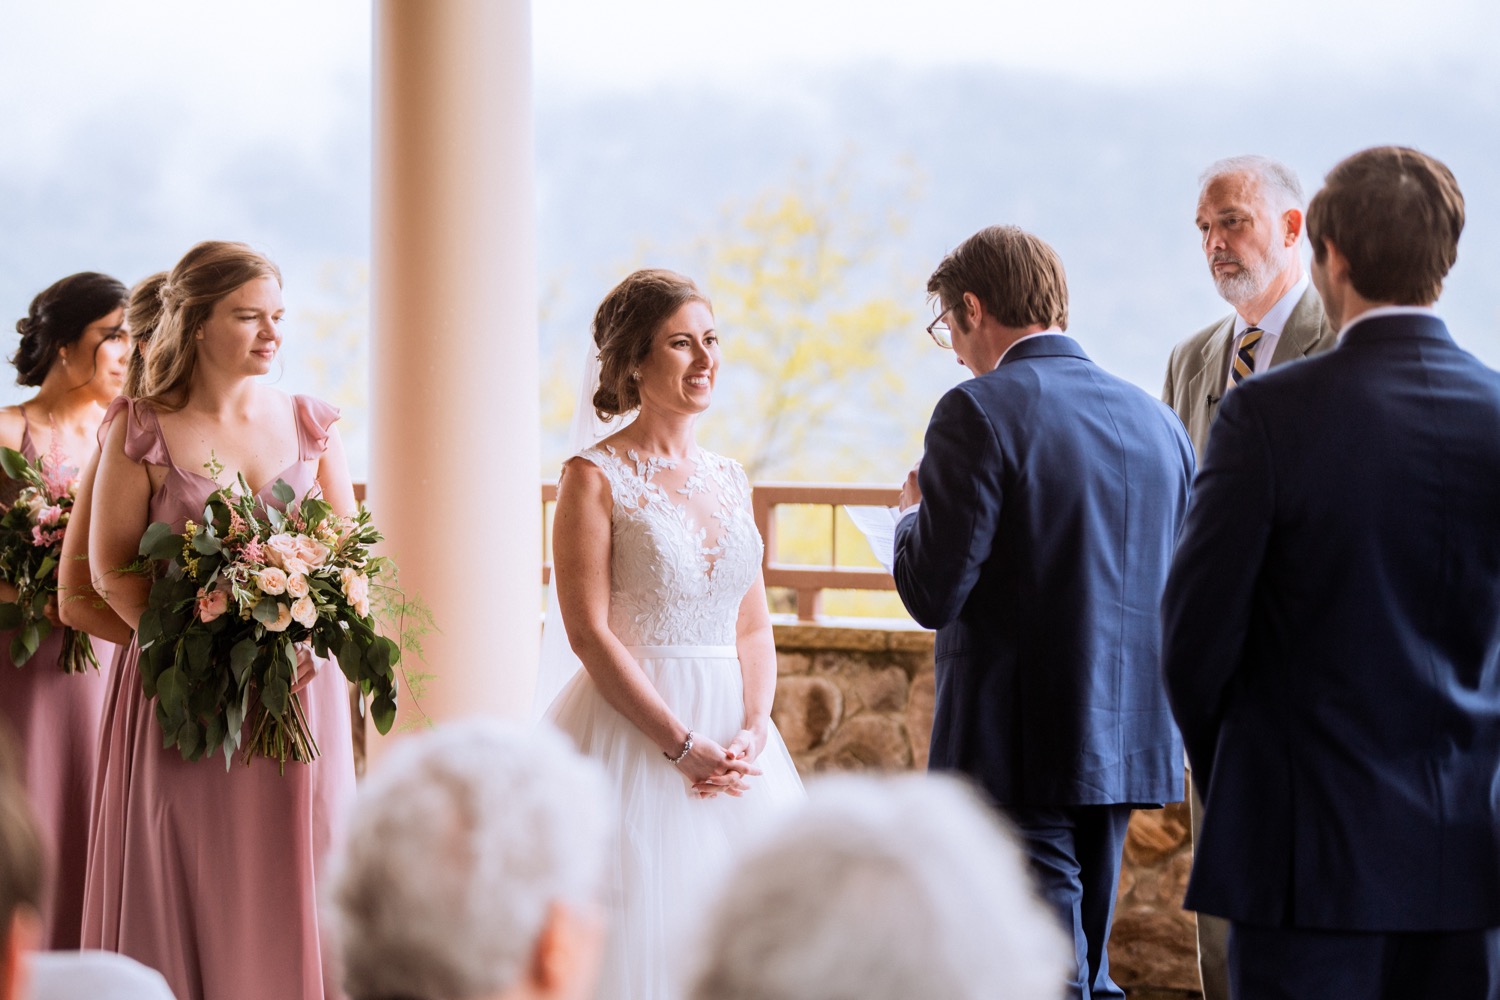 Bride and groom say "I do" at wedding ceremony in Lexington Virginia